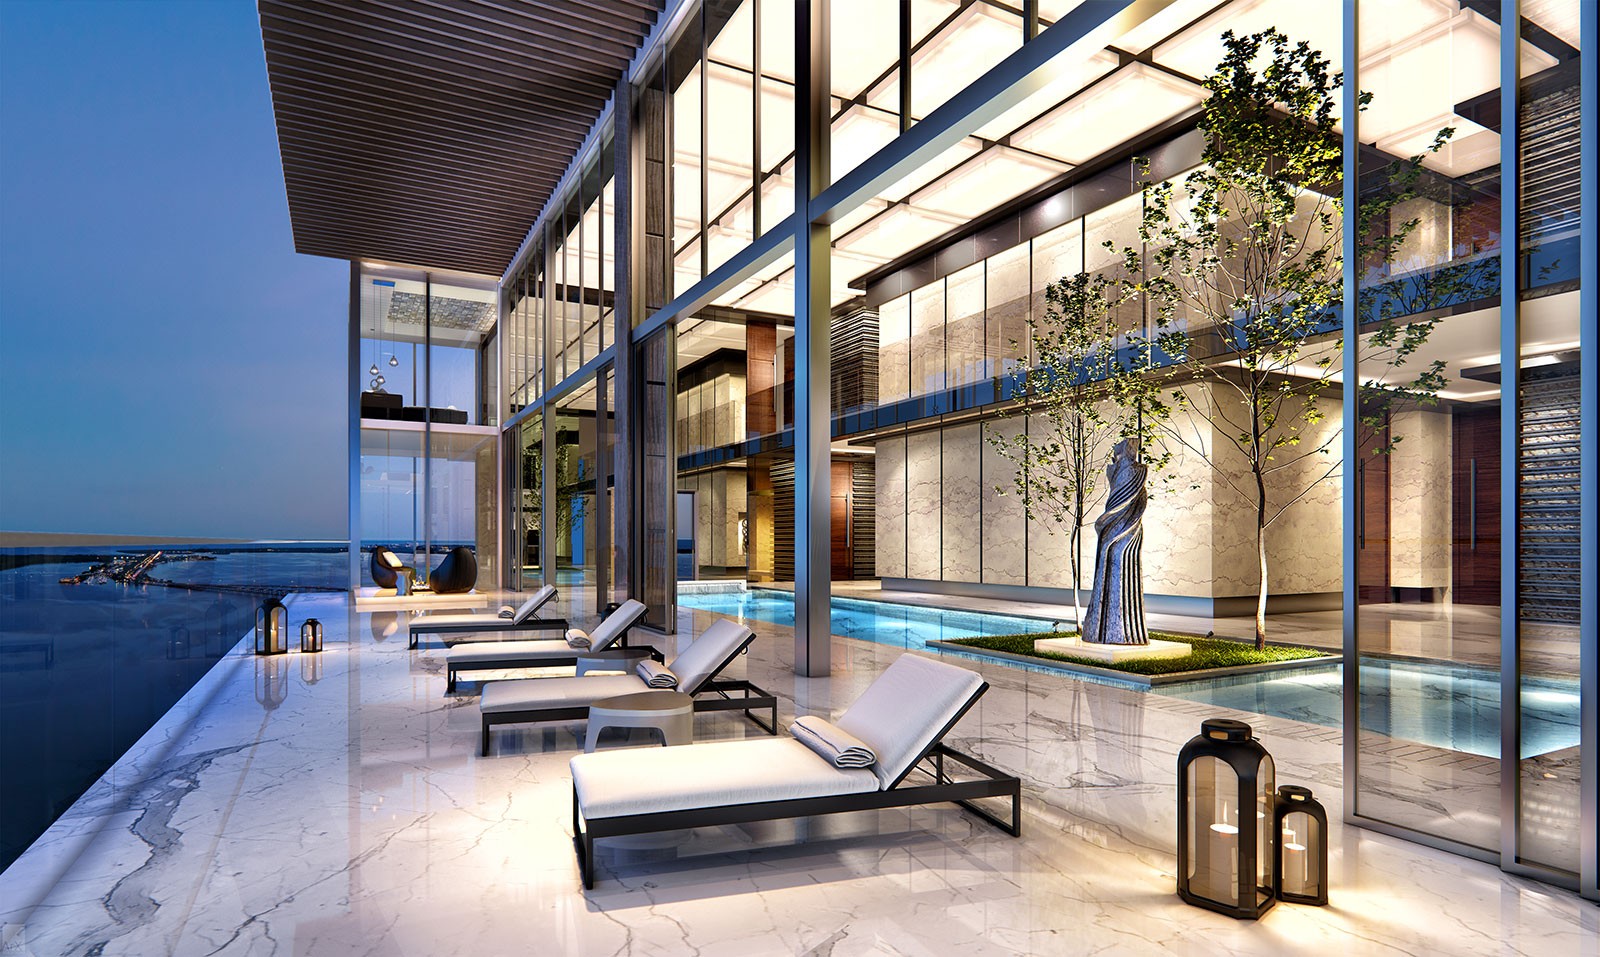 Echo Brickell penthouse indoor pool